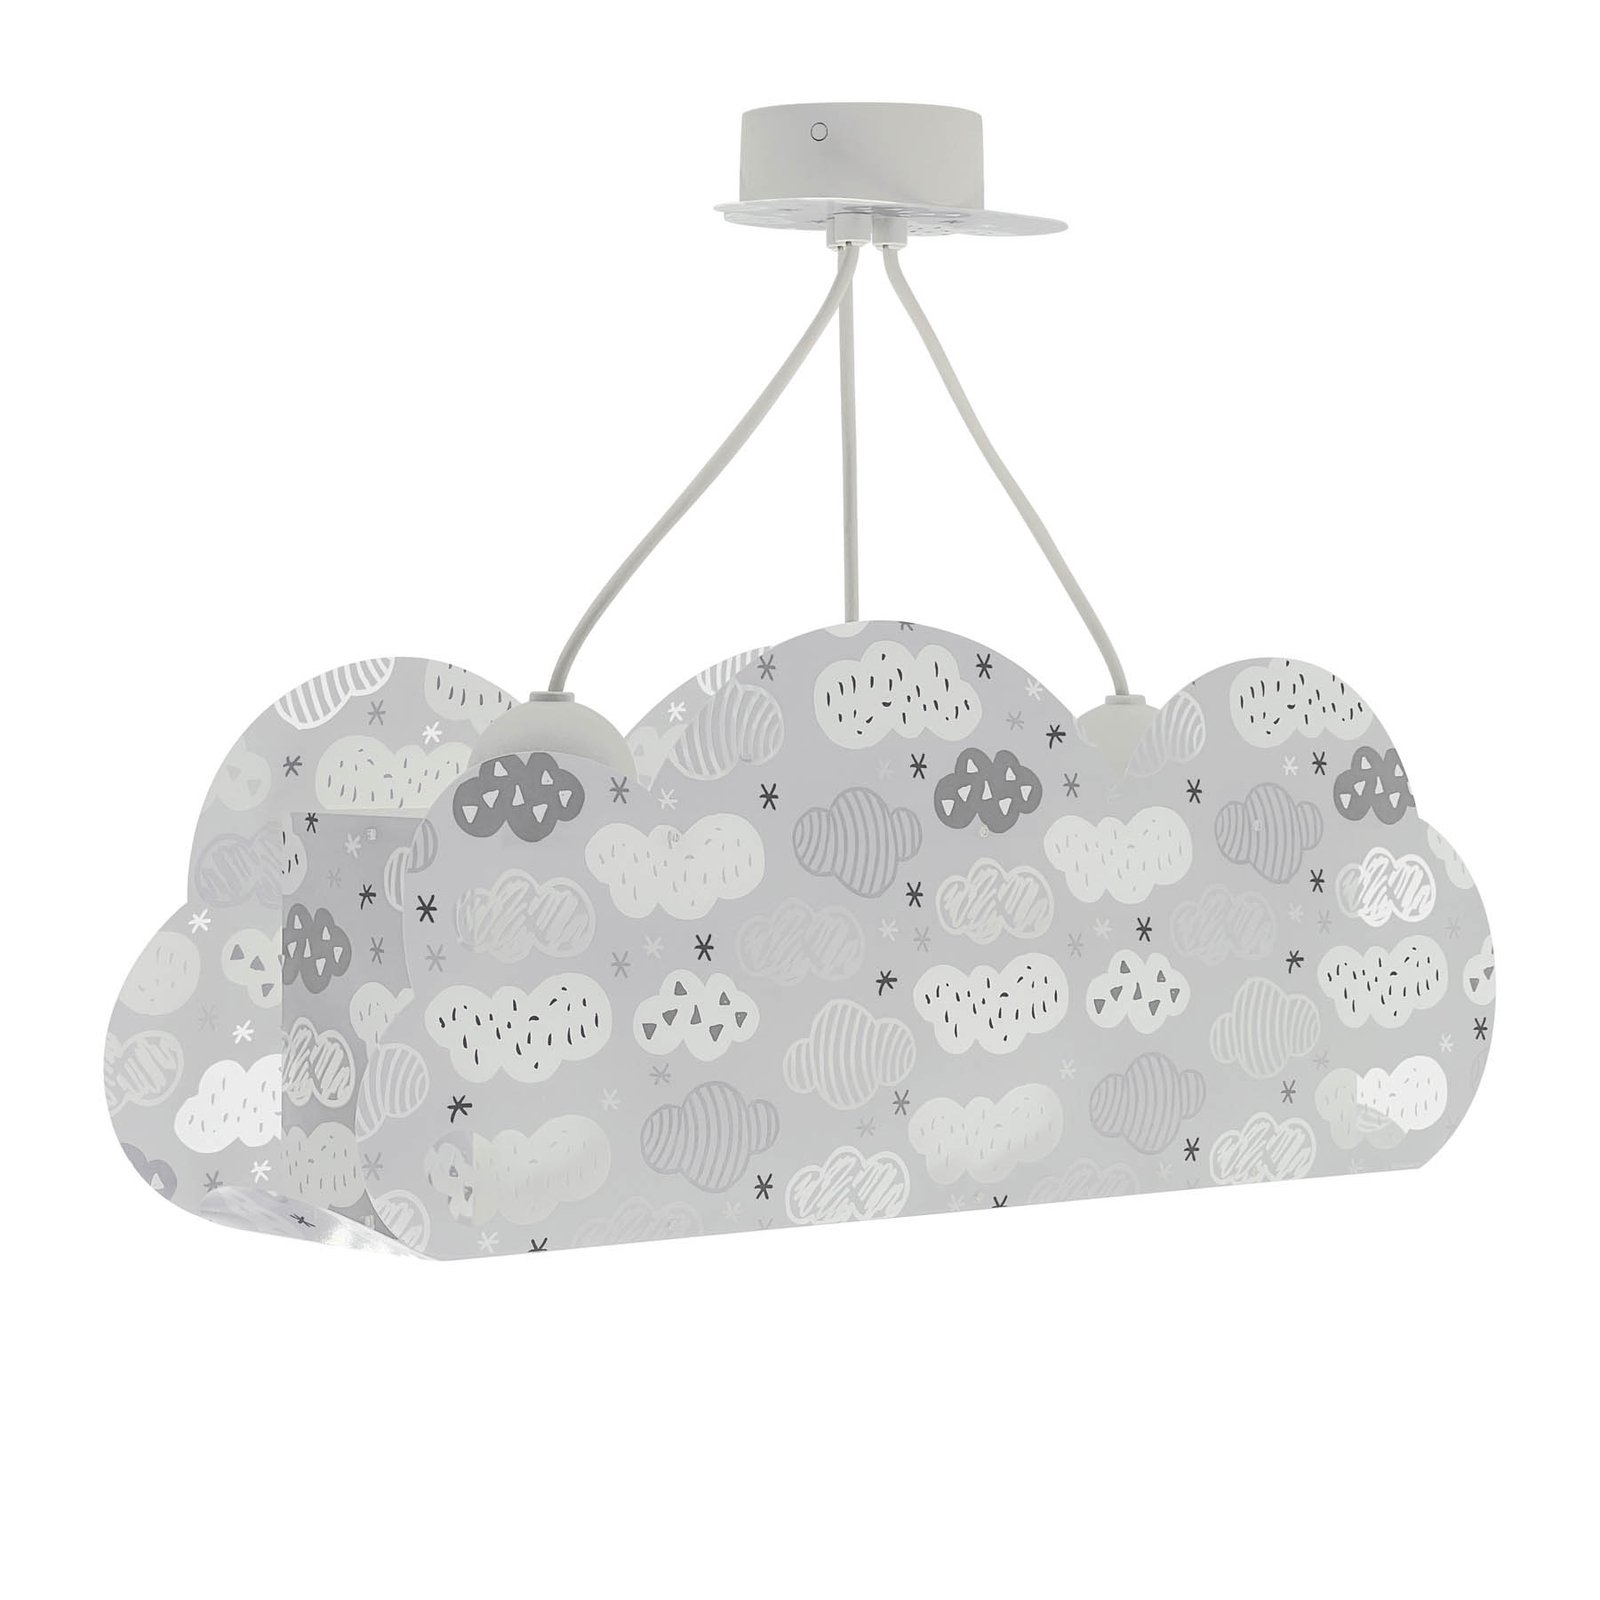 Dalber Cloud Grey pendellampe i skyform, grå